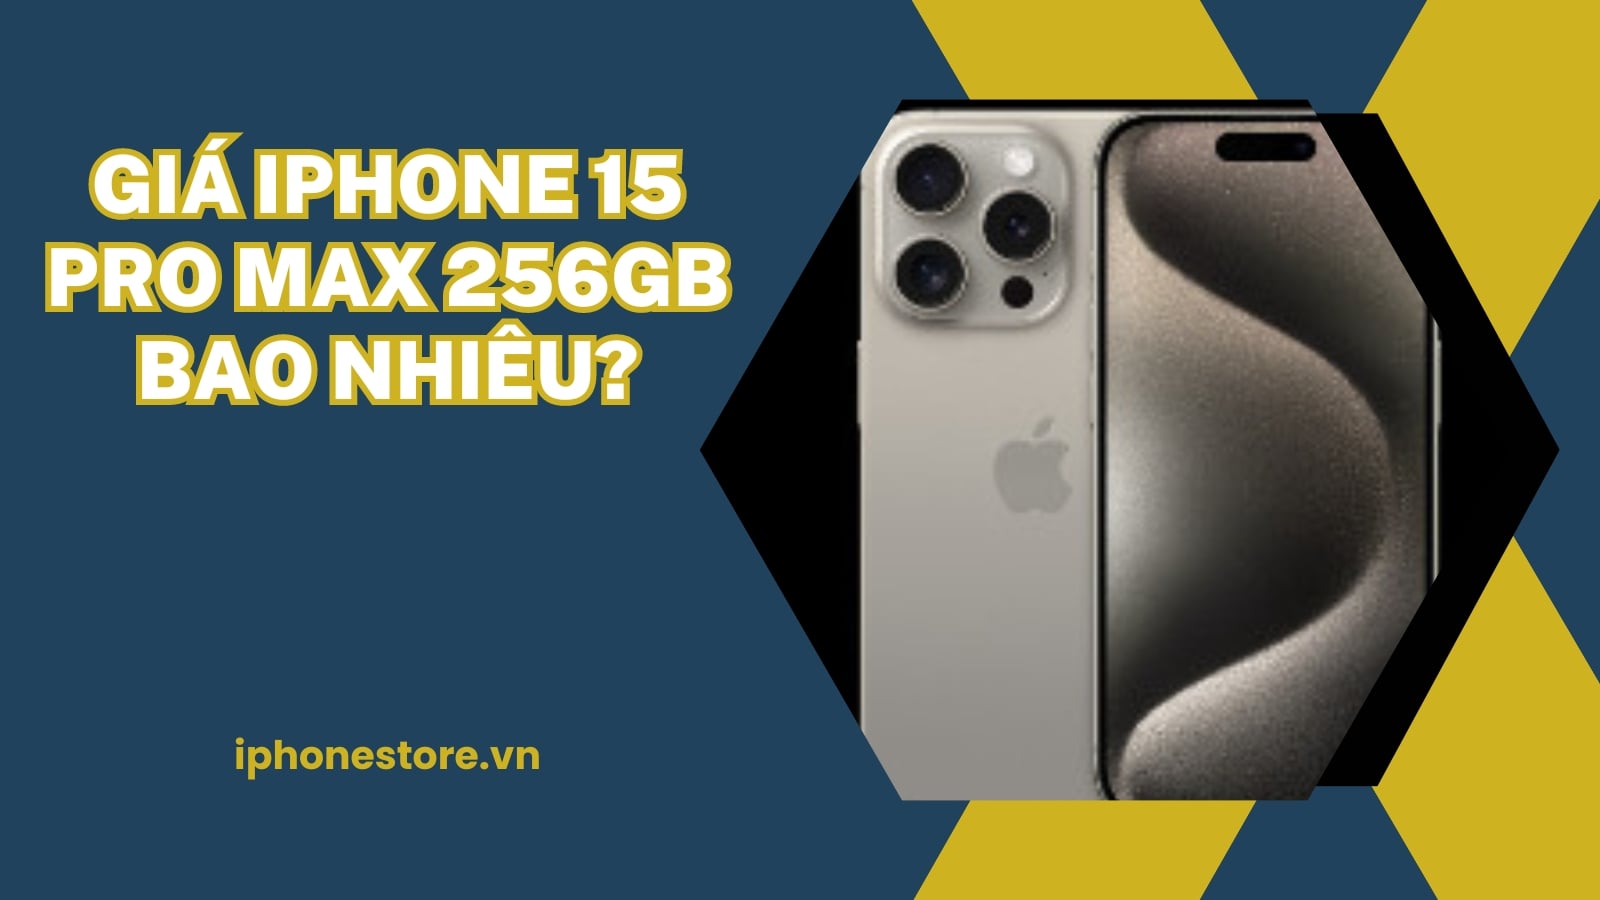 Giá iPhone 15 pro max 256GB bao nhiêu?